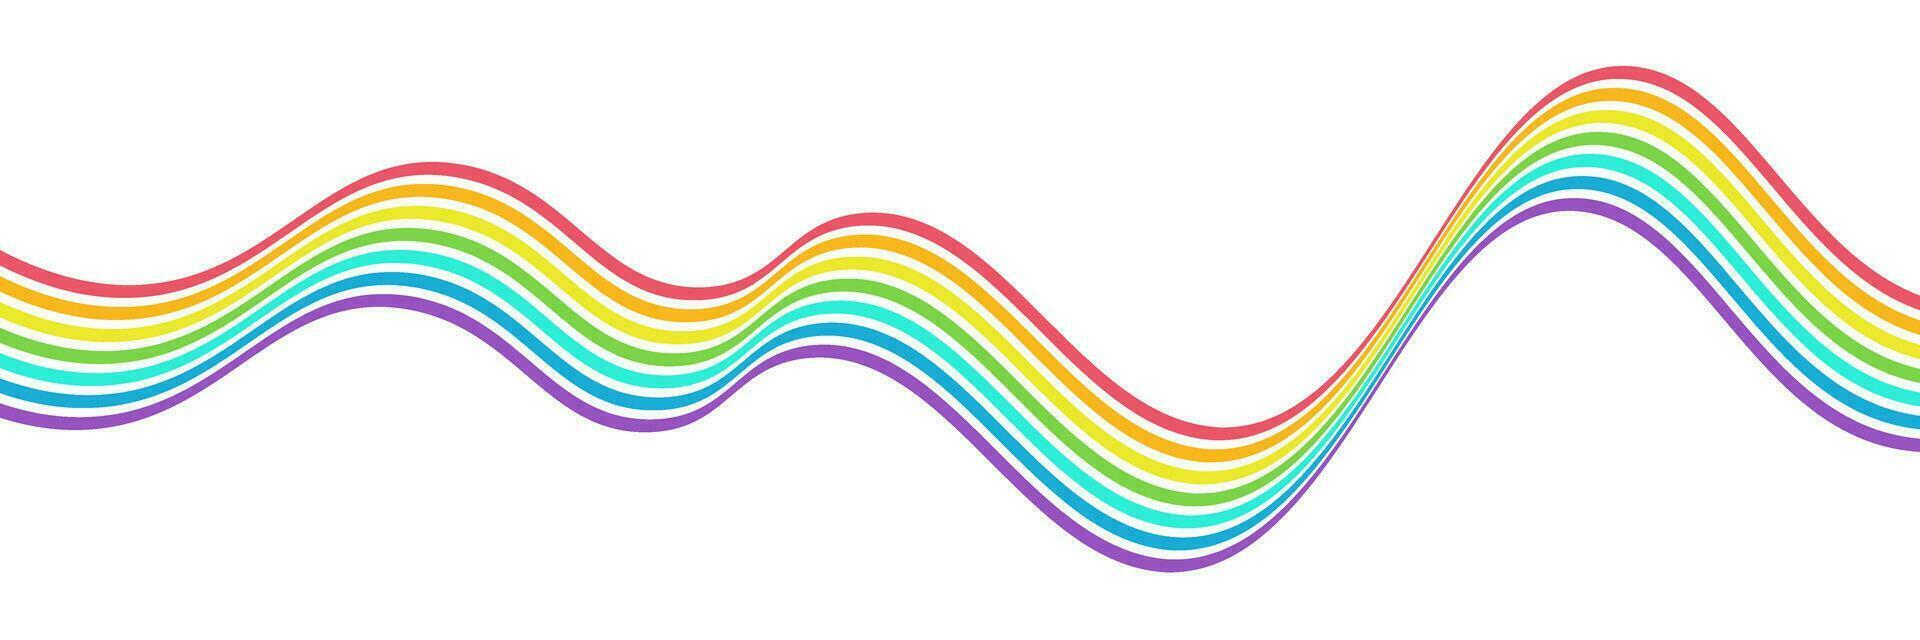 rainbow wavy color lines illustration vector